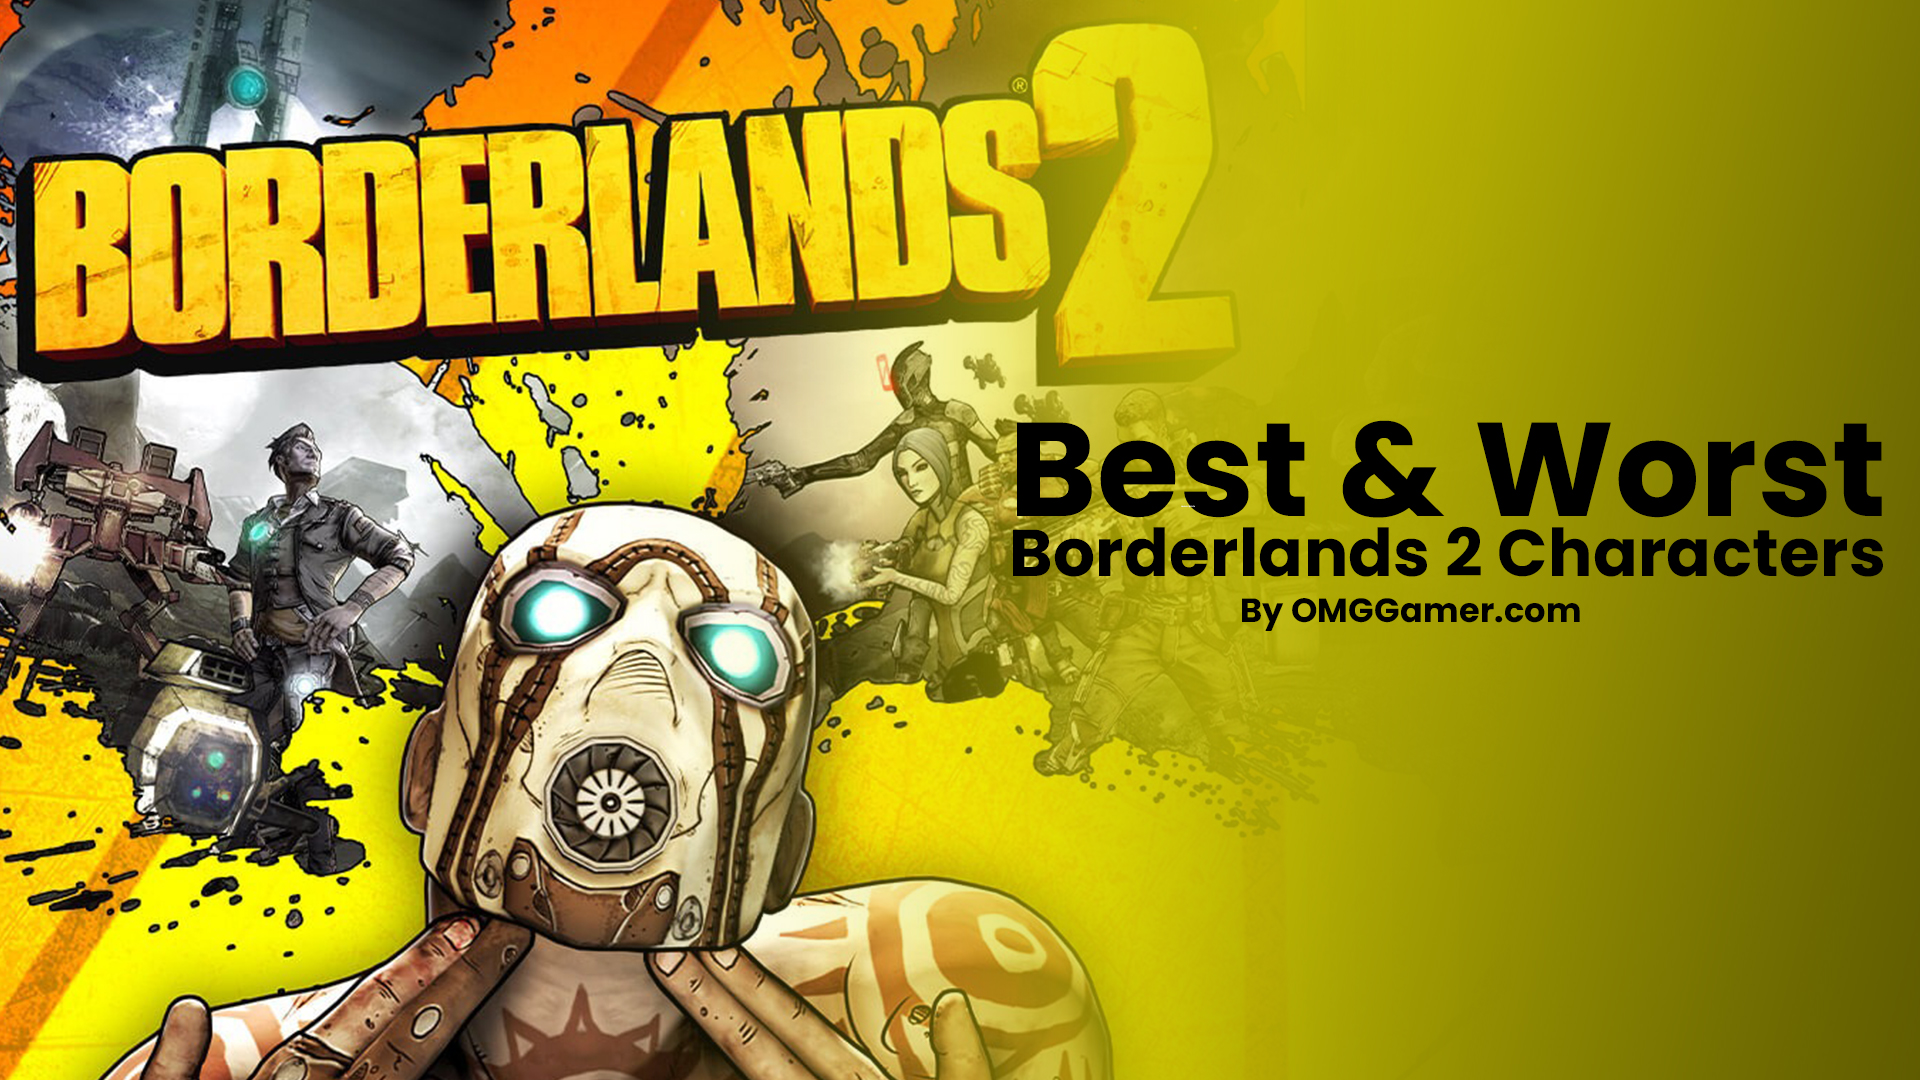 Best & Worst Borderlands 2 Characters [Complete List]